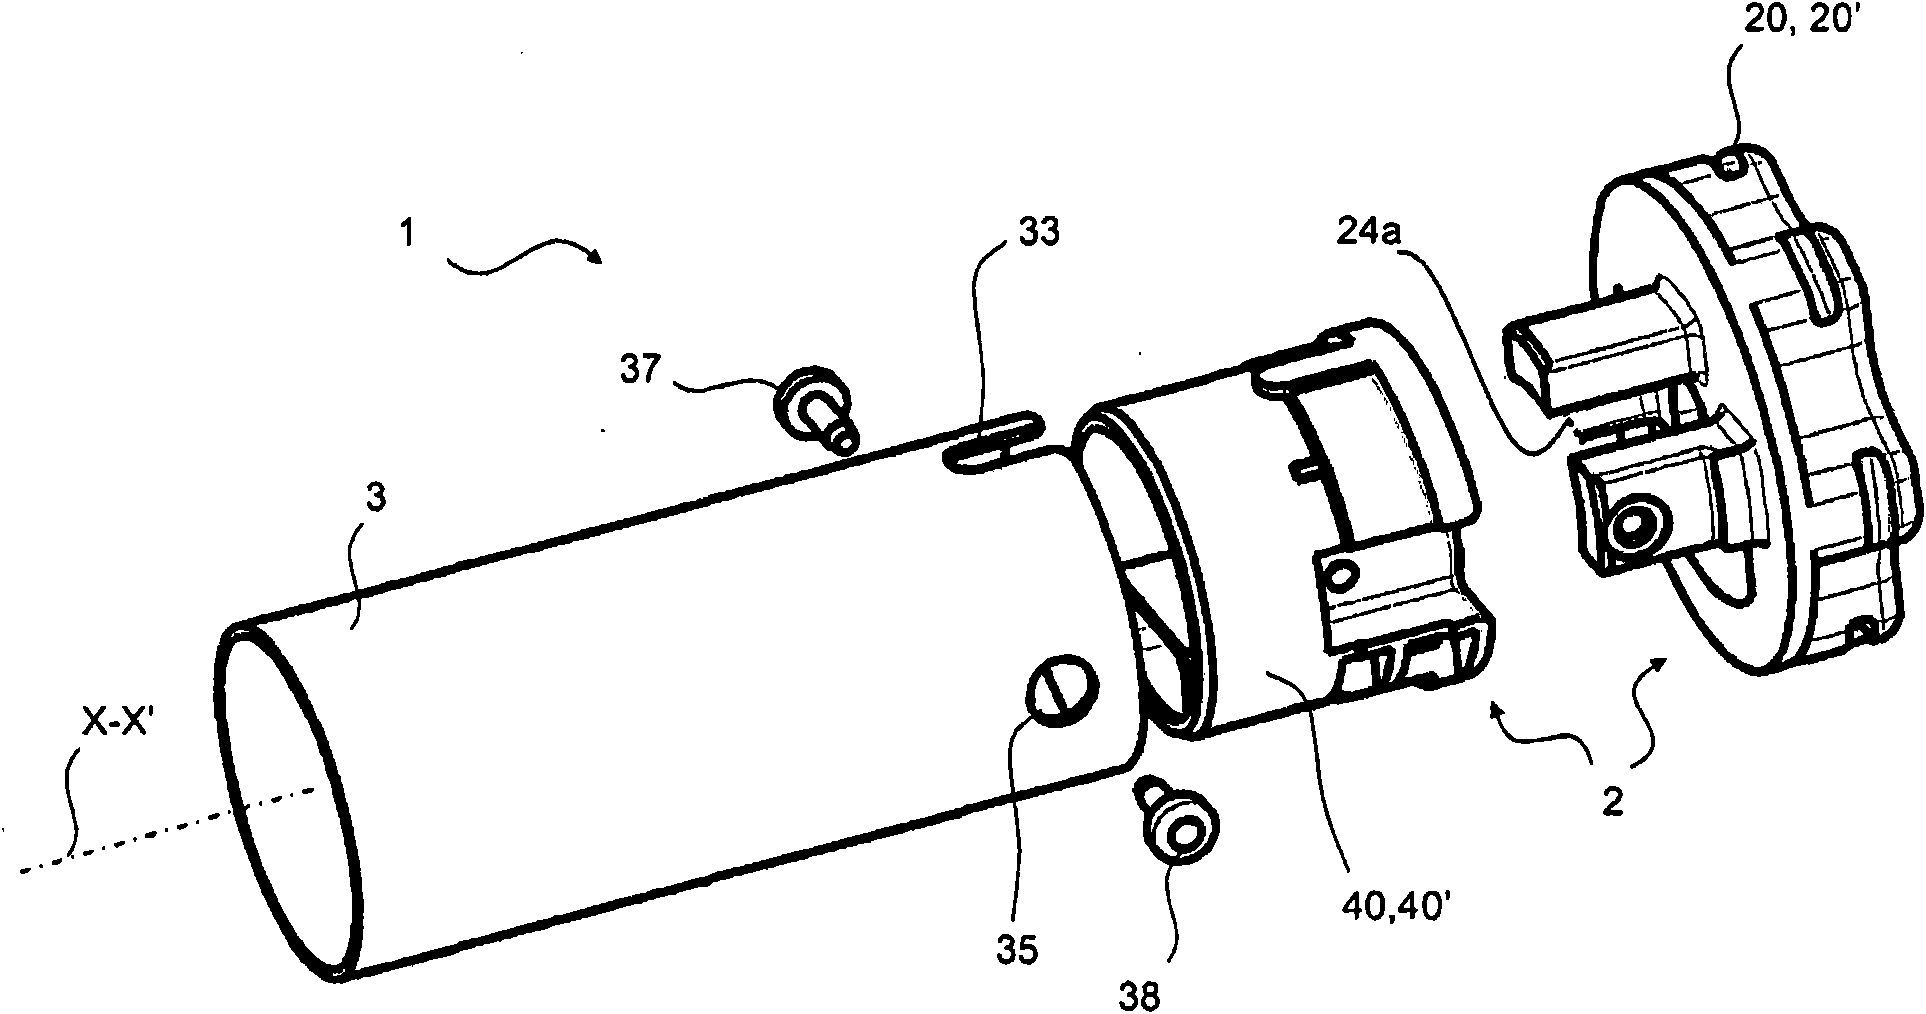 Tubular actuator for driving a roller shutter